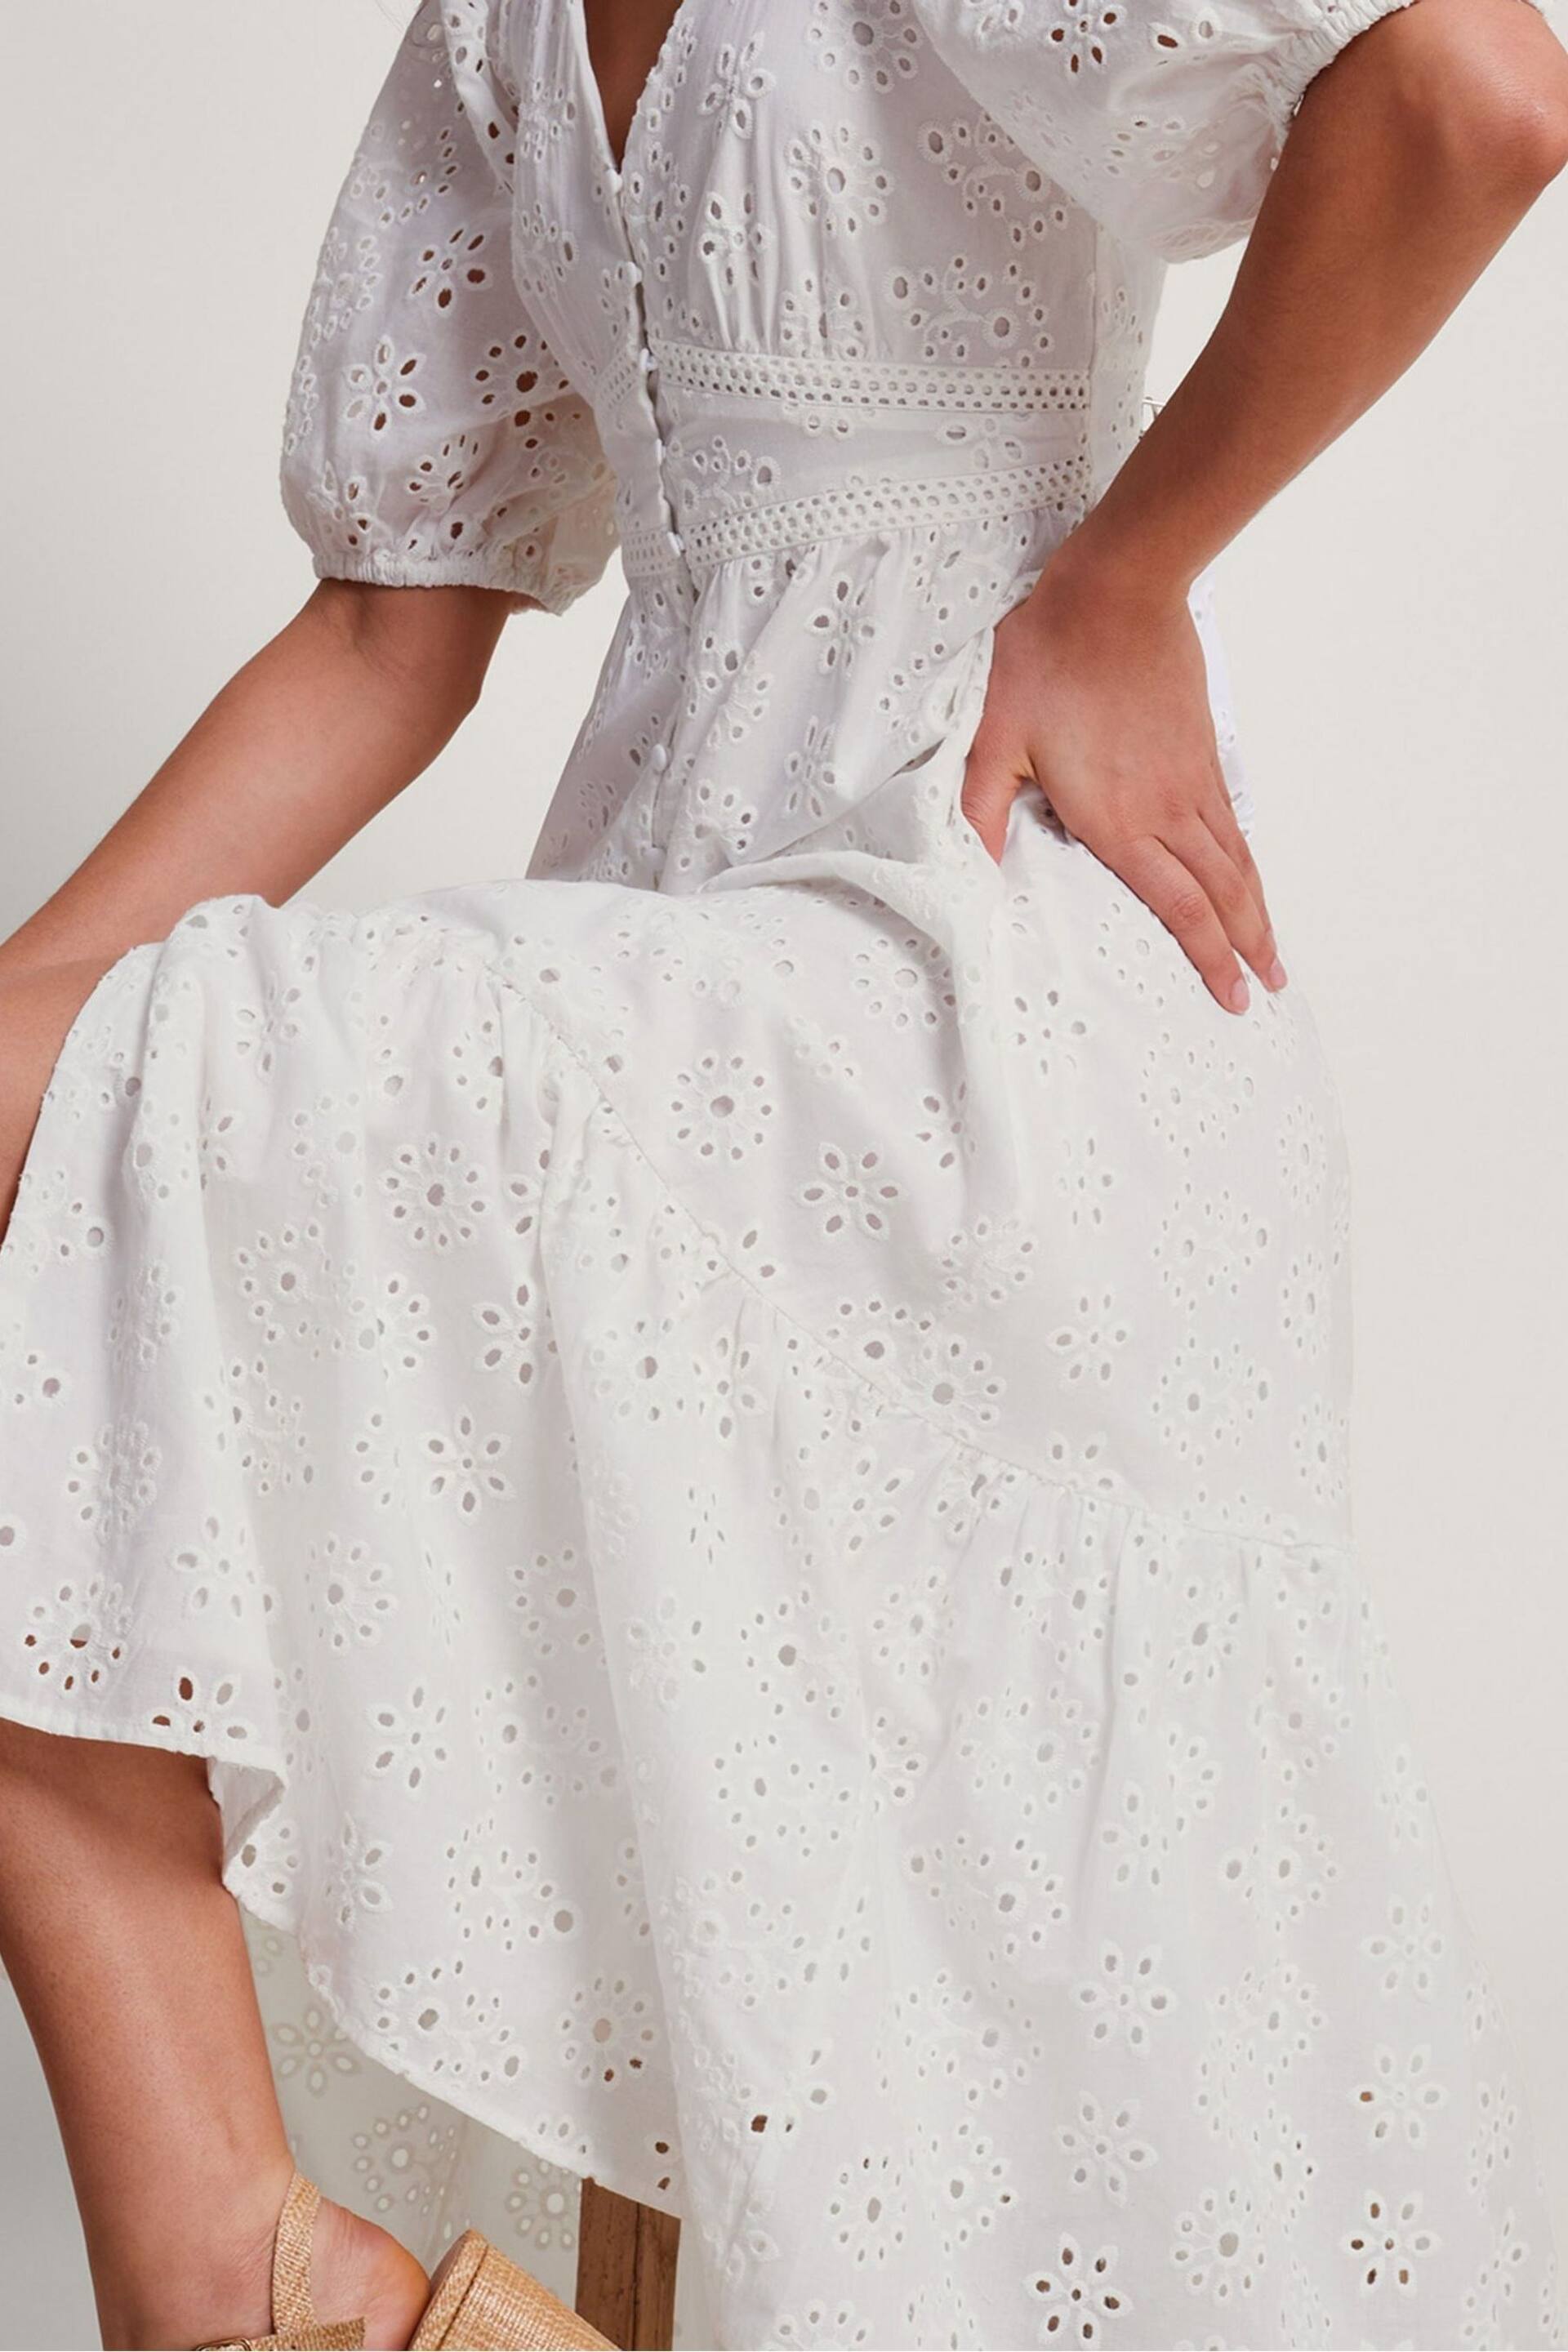 Monsoon White Broderie Bettie Dress - Image 2 of 4